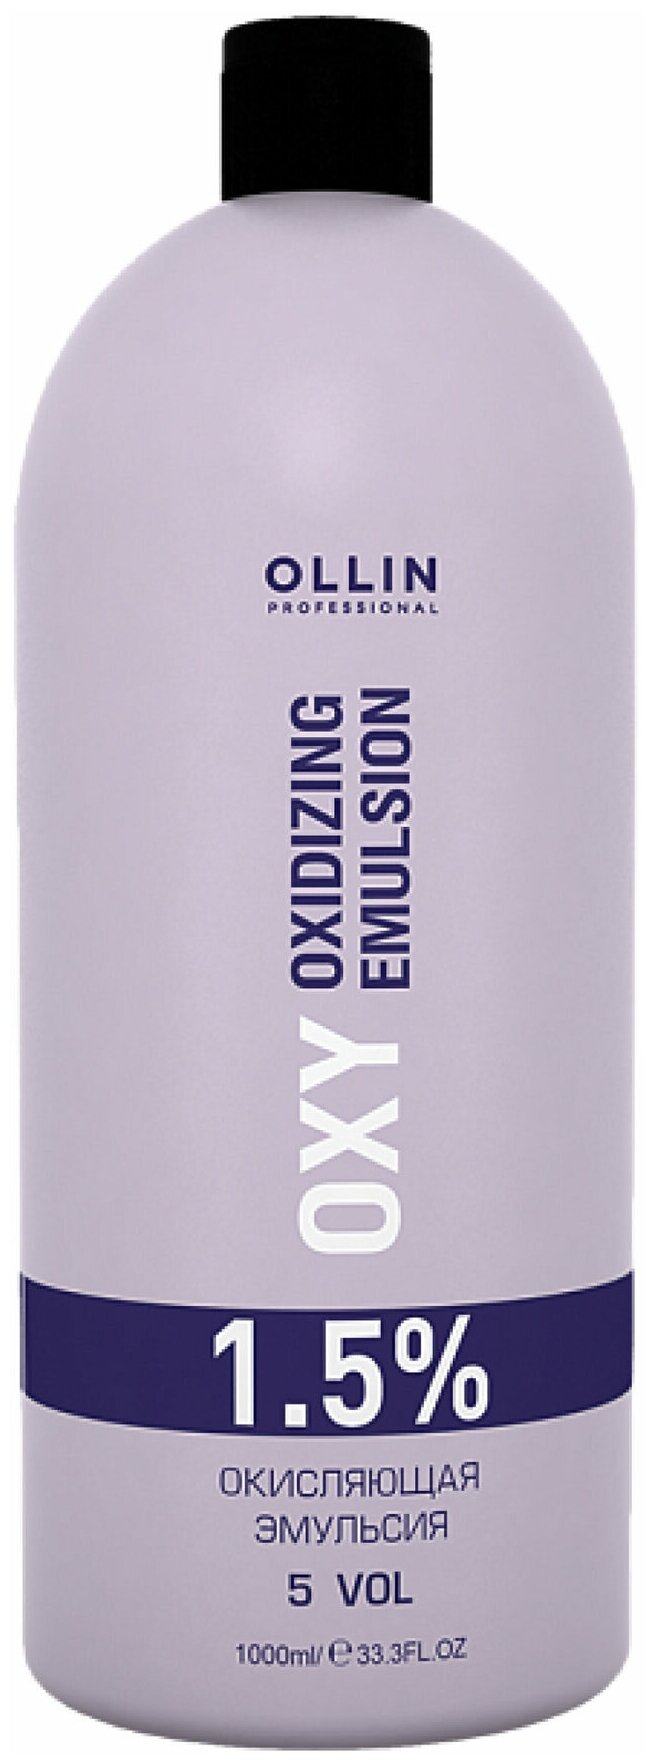 OLLIN Professional Окисляющая эмульсия Perfomance Oxy, 1.5%, 1000 мл.